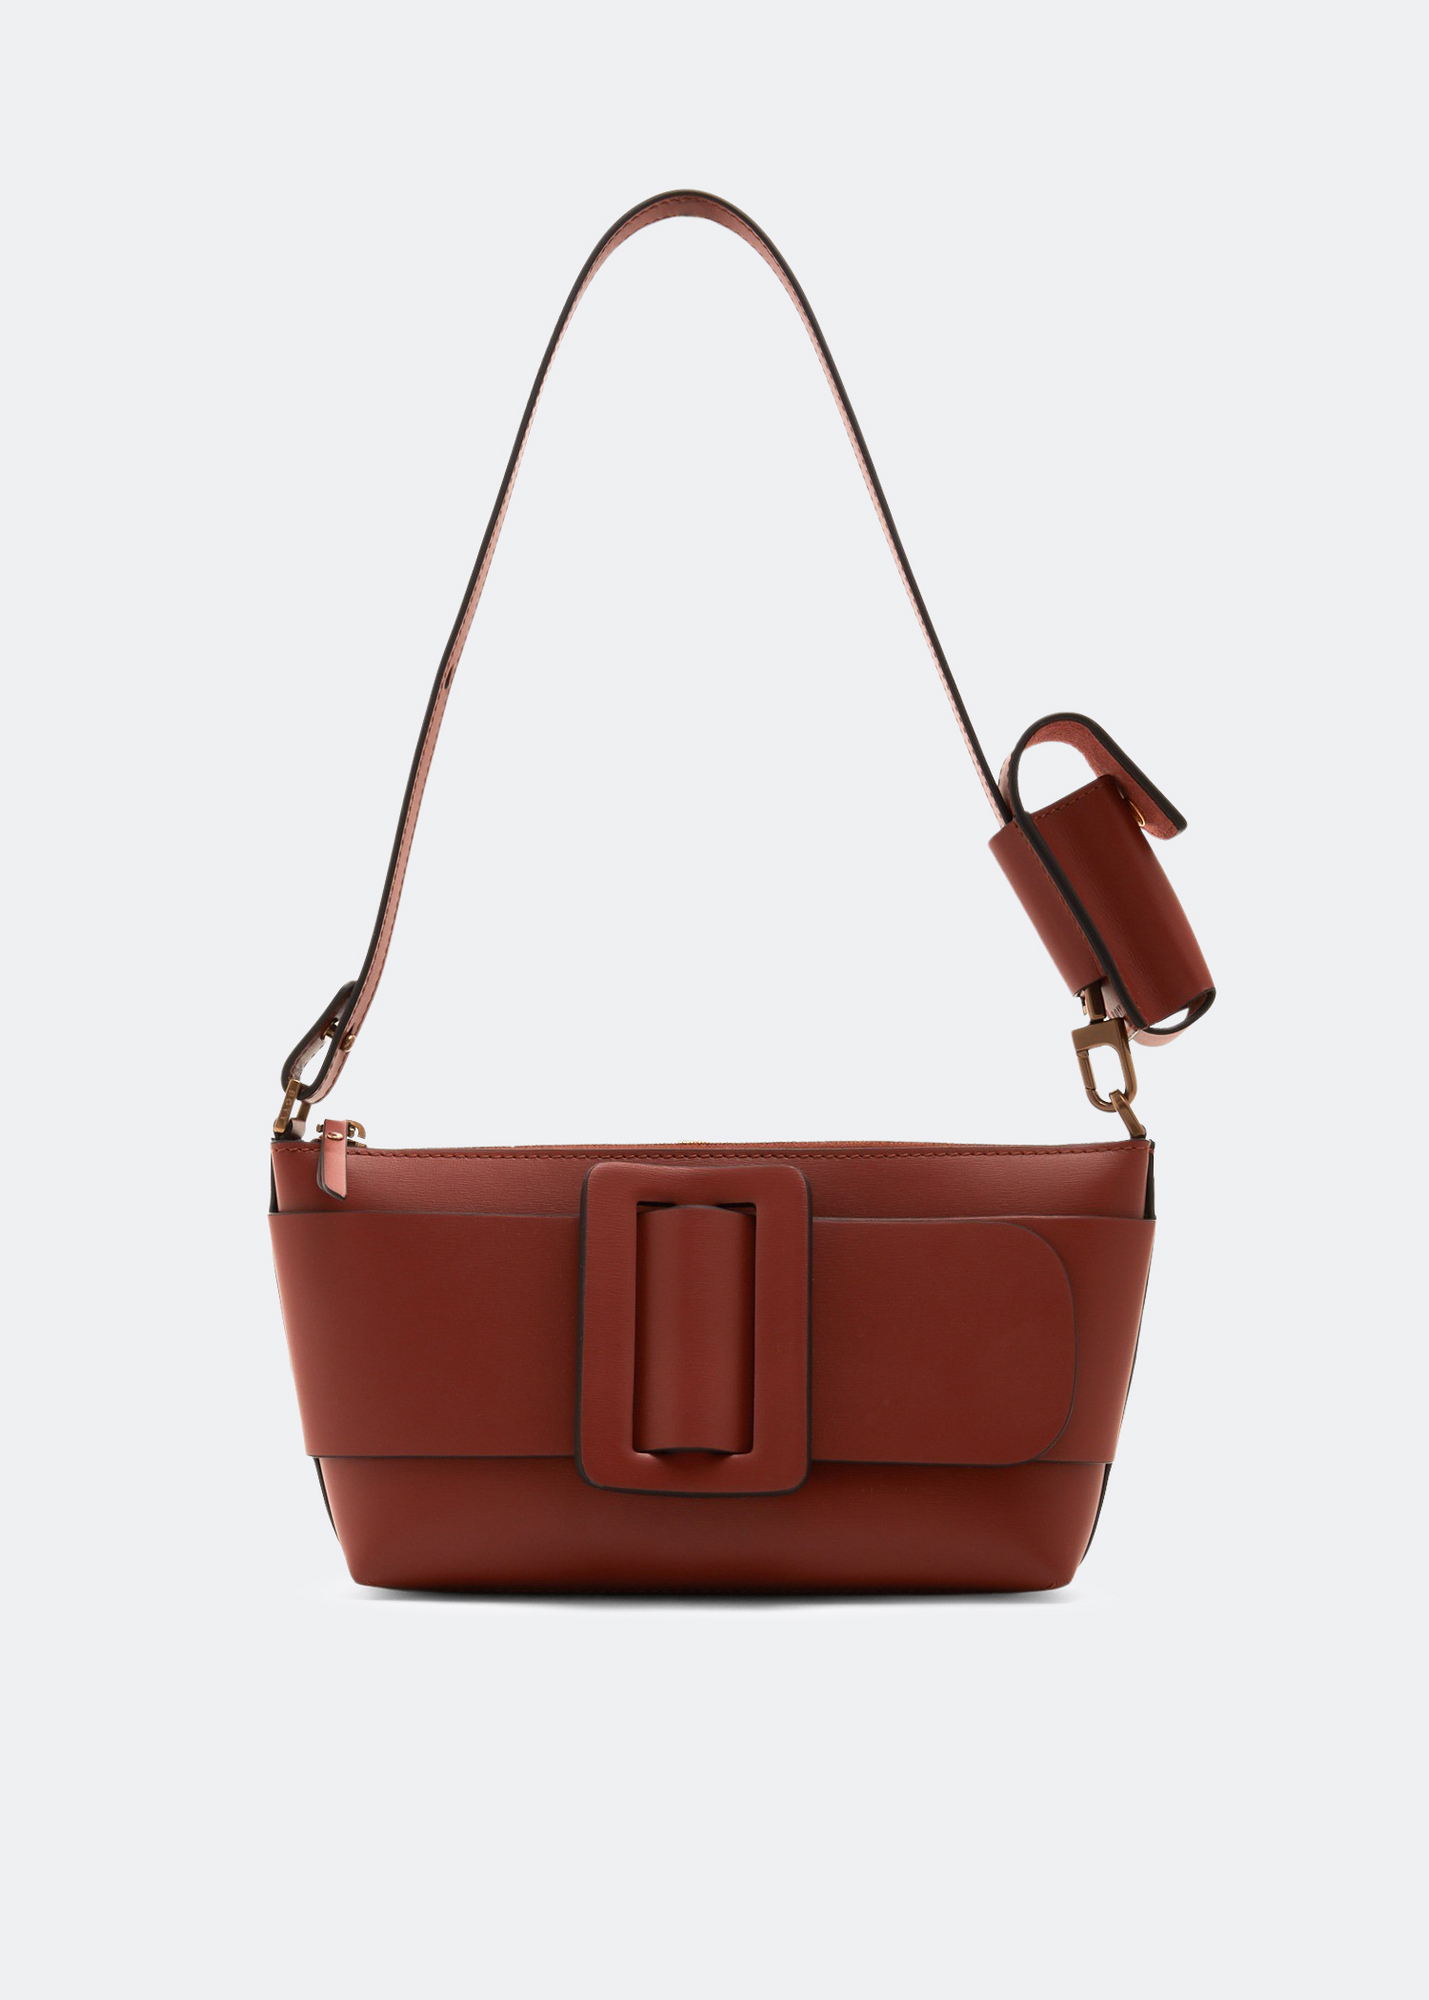 Buckle pouchette leather handbag by Boyy